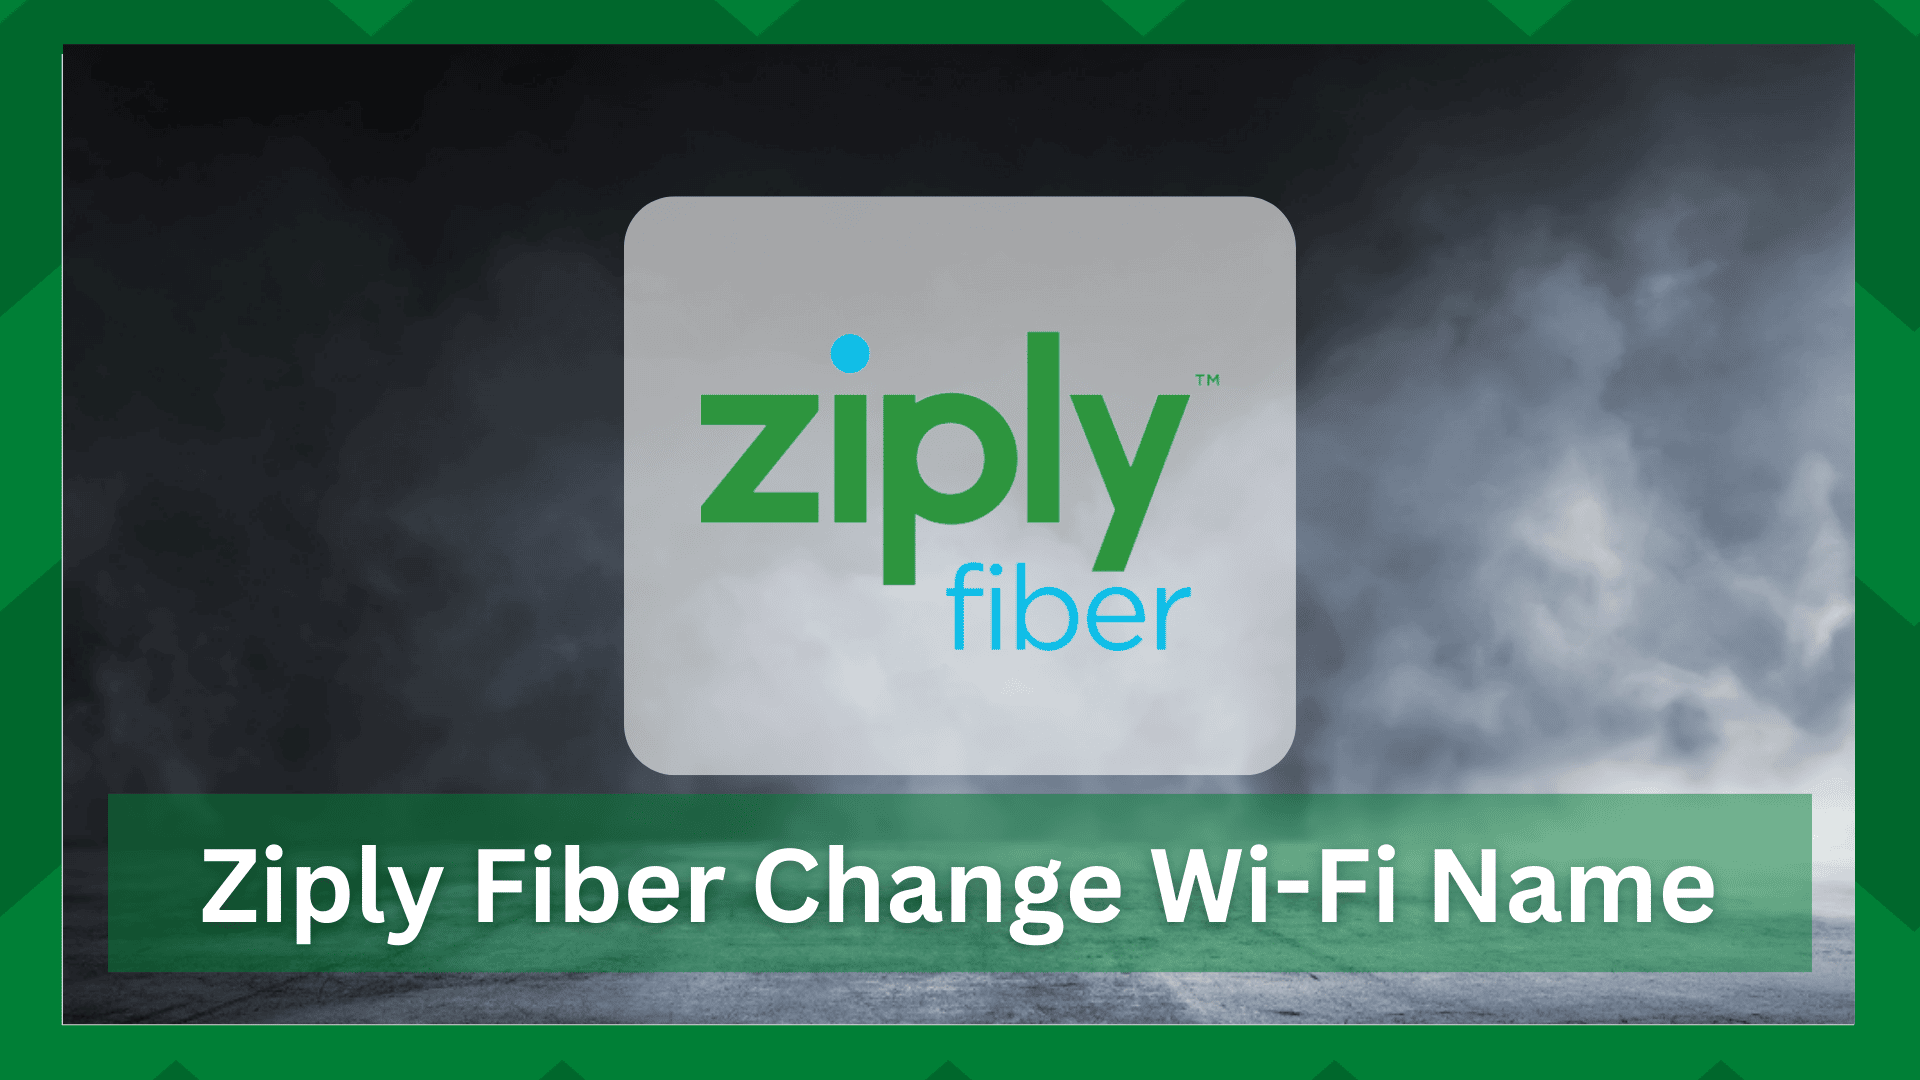 Ziply Fiber Change Wi-Fi Name